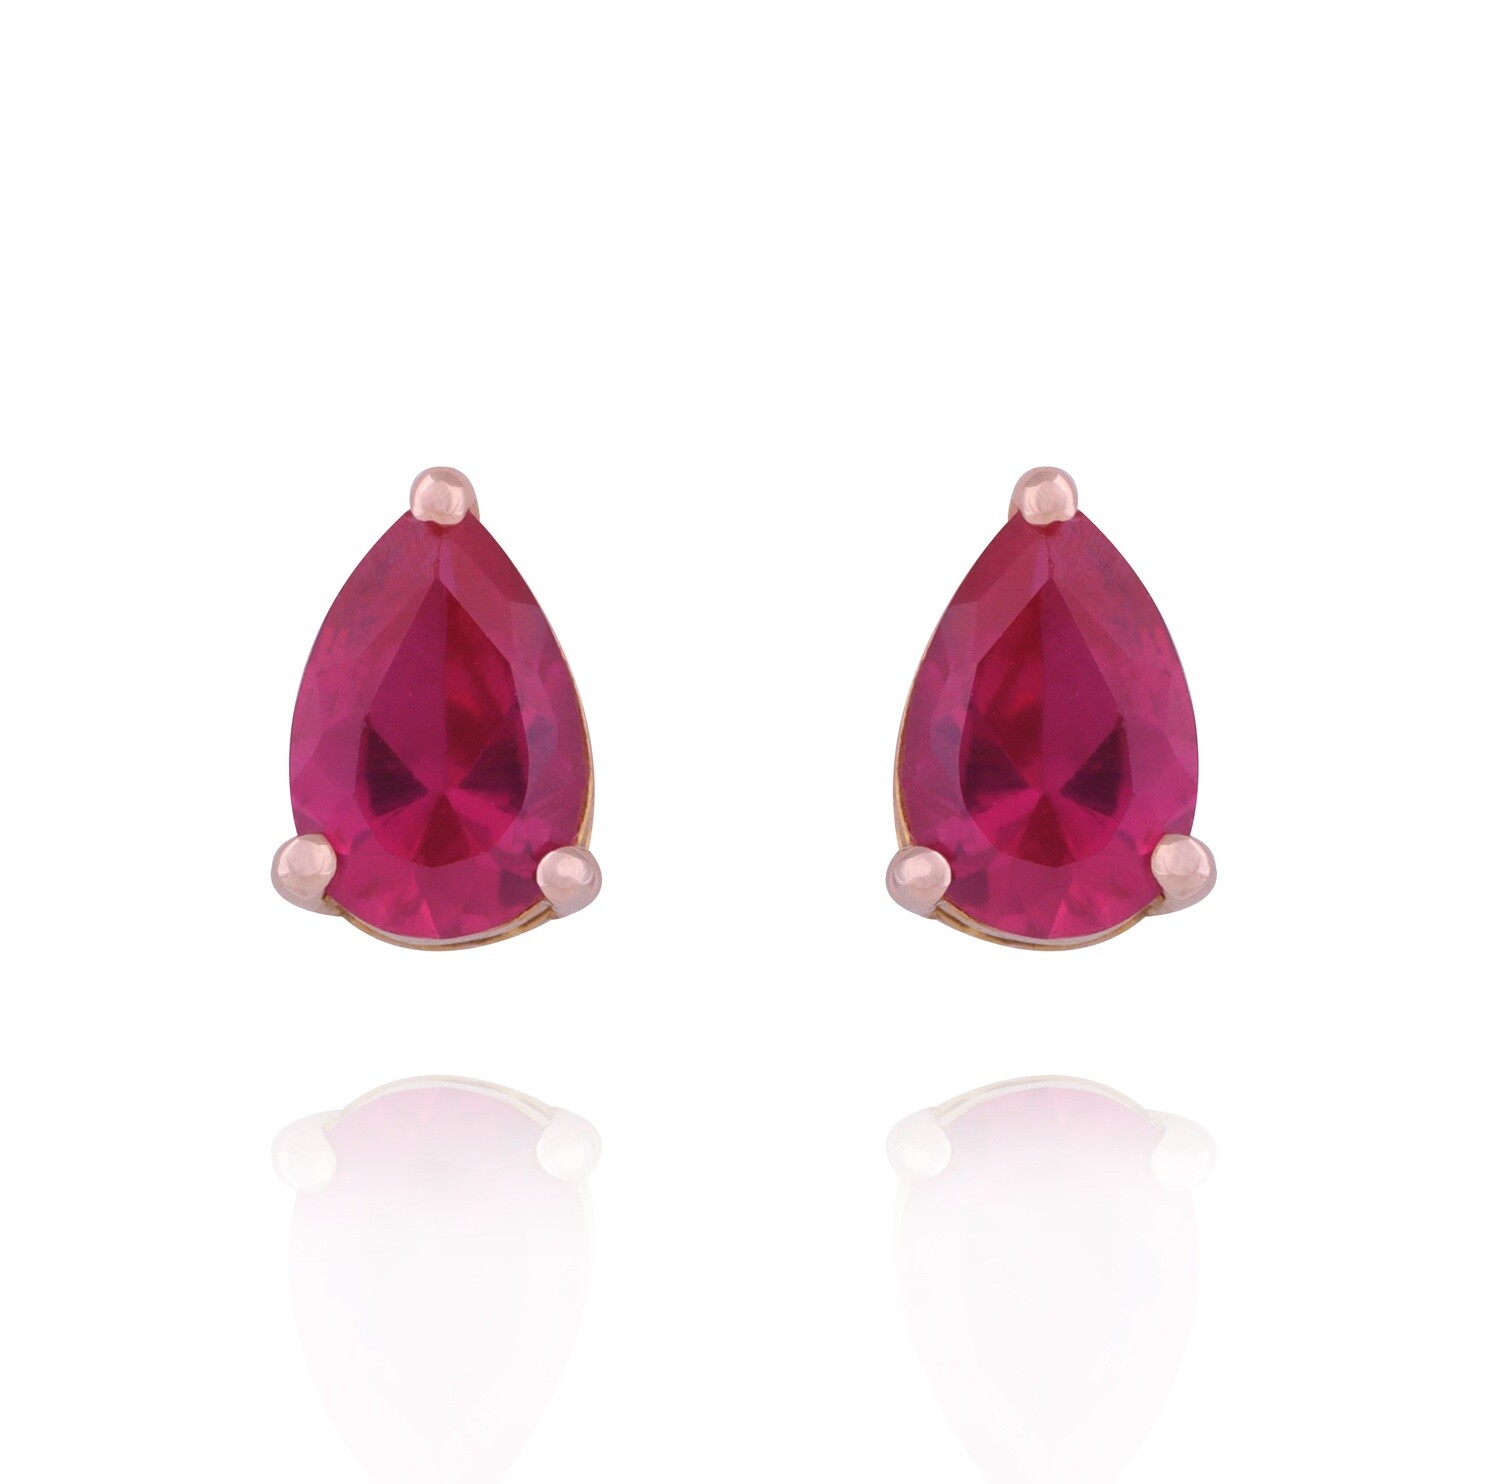 Eternal Gold Earrings with Ruby single stone